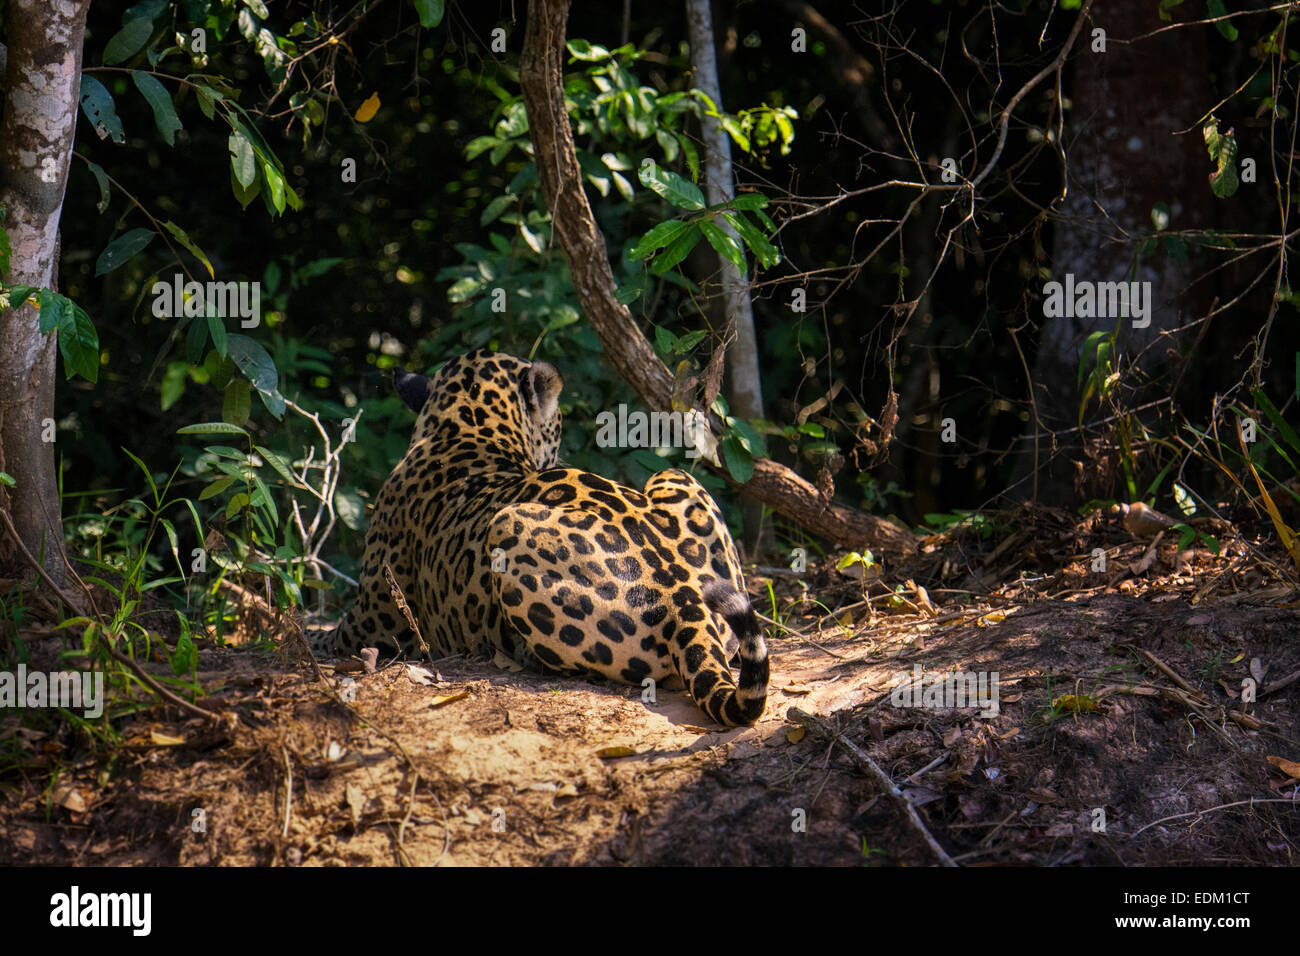 Rear View of the male Jaguar, Panthera onca, they call 'Mick Jaguar', Pantanal, Mato Grosso, Brazil, South America Stock Photo